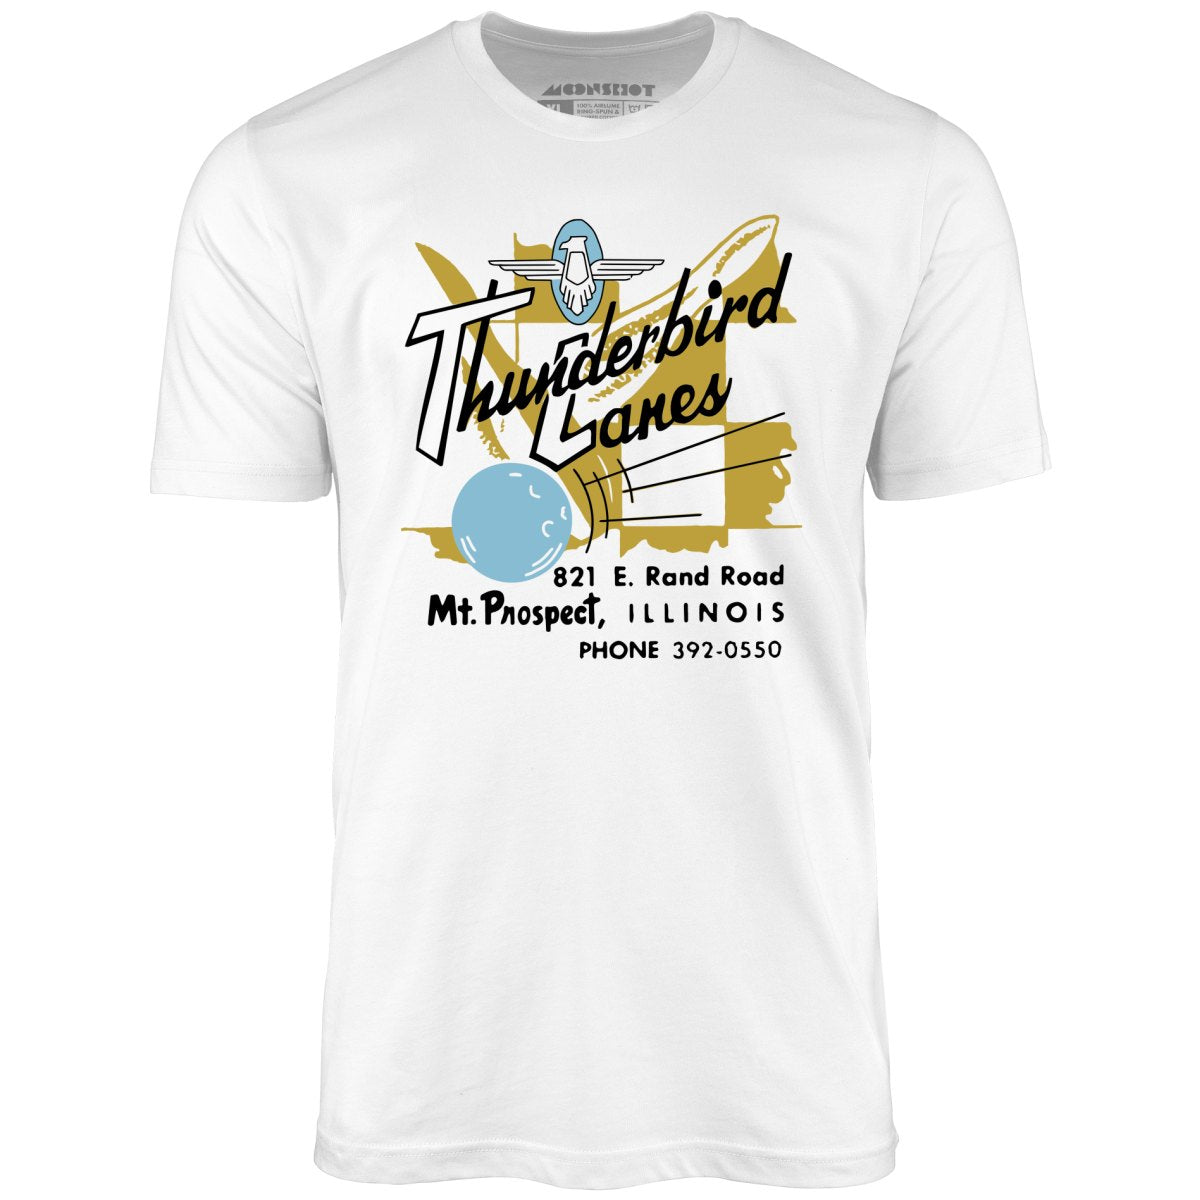 Thunderbird Lanes - Mt. Prospect, IL - Vintage Bowling Alley - Unisex T-Shirt